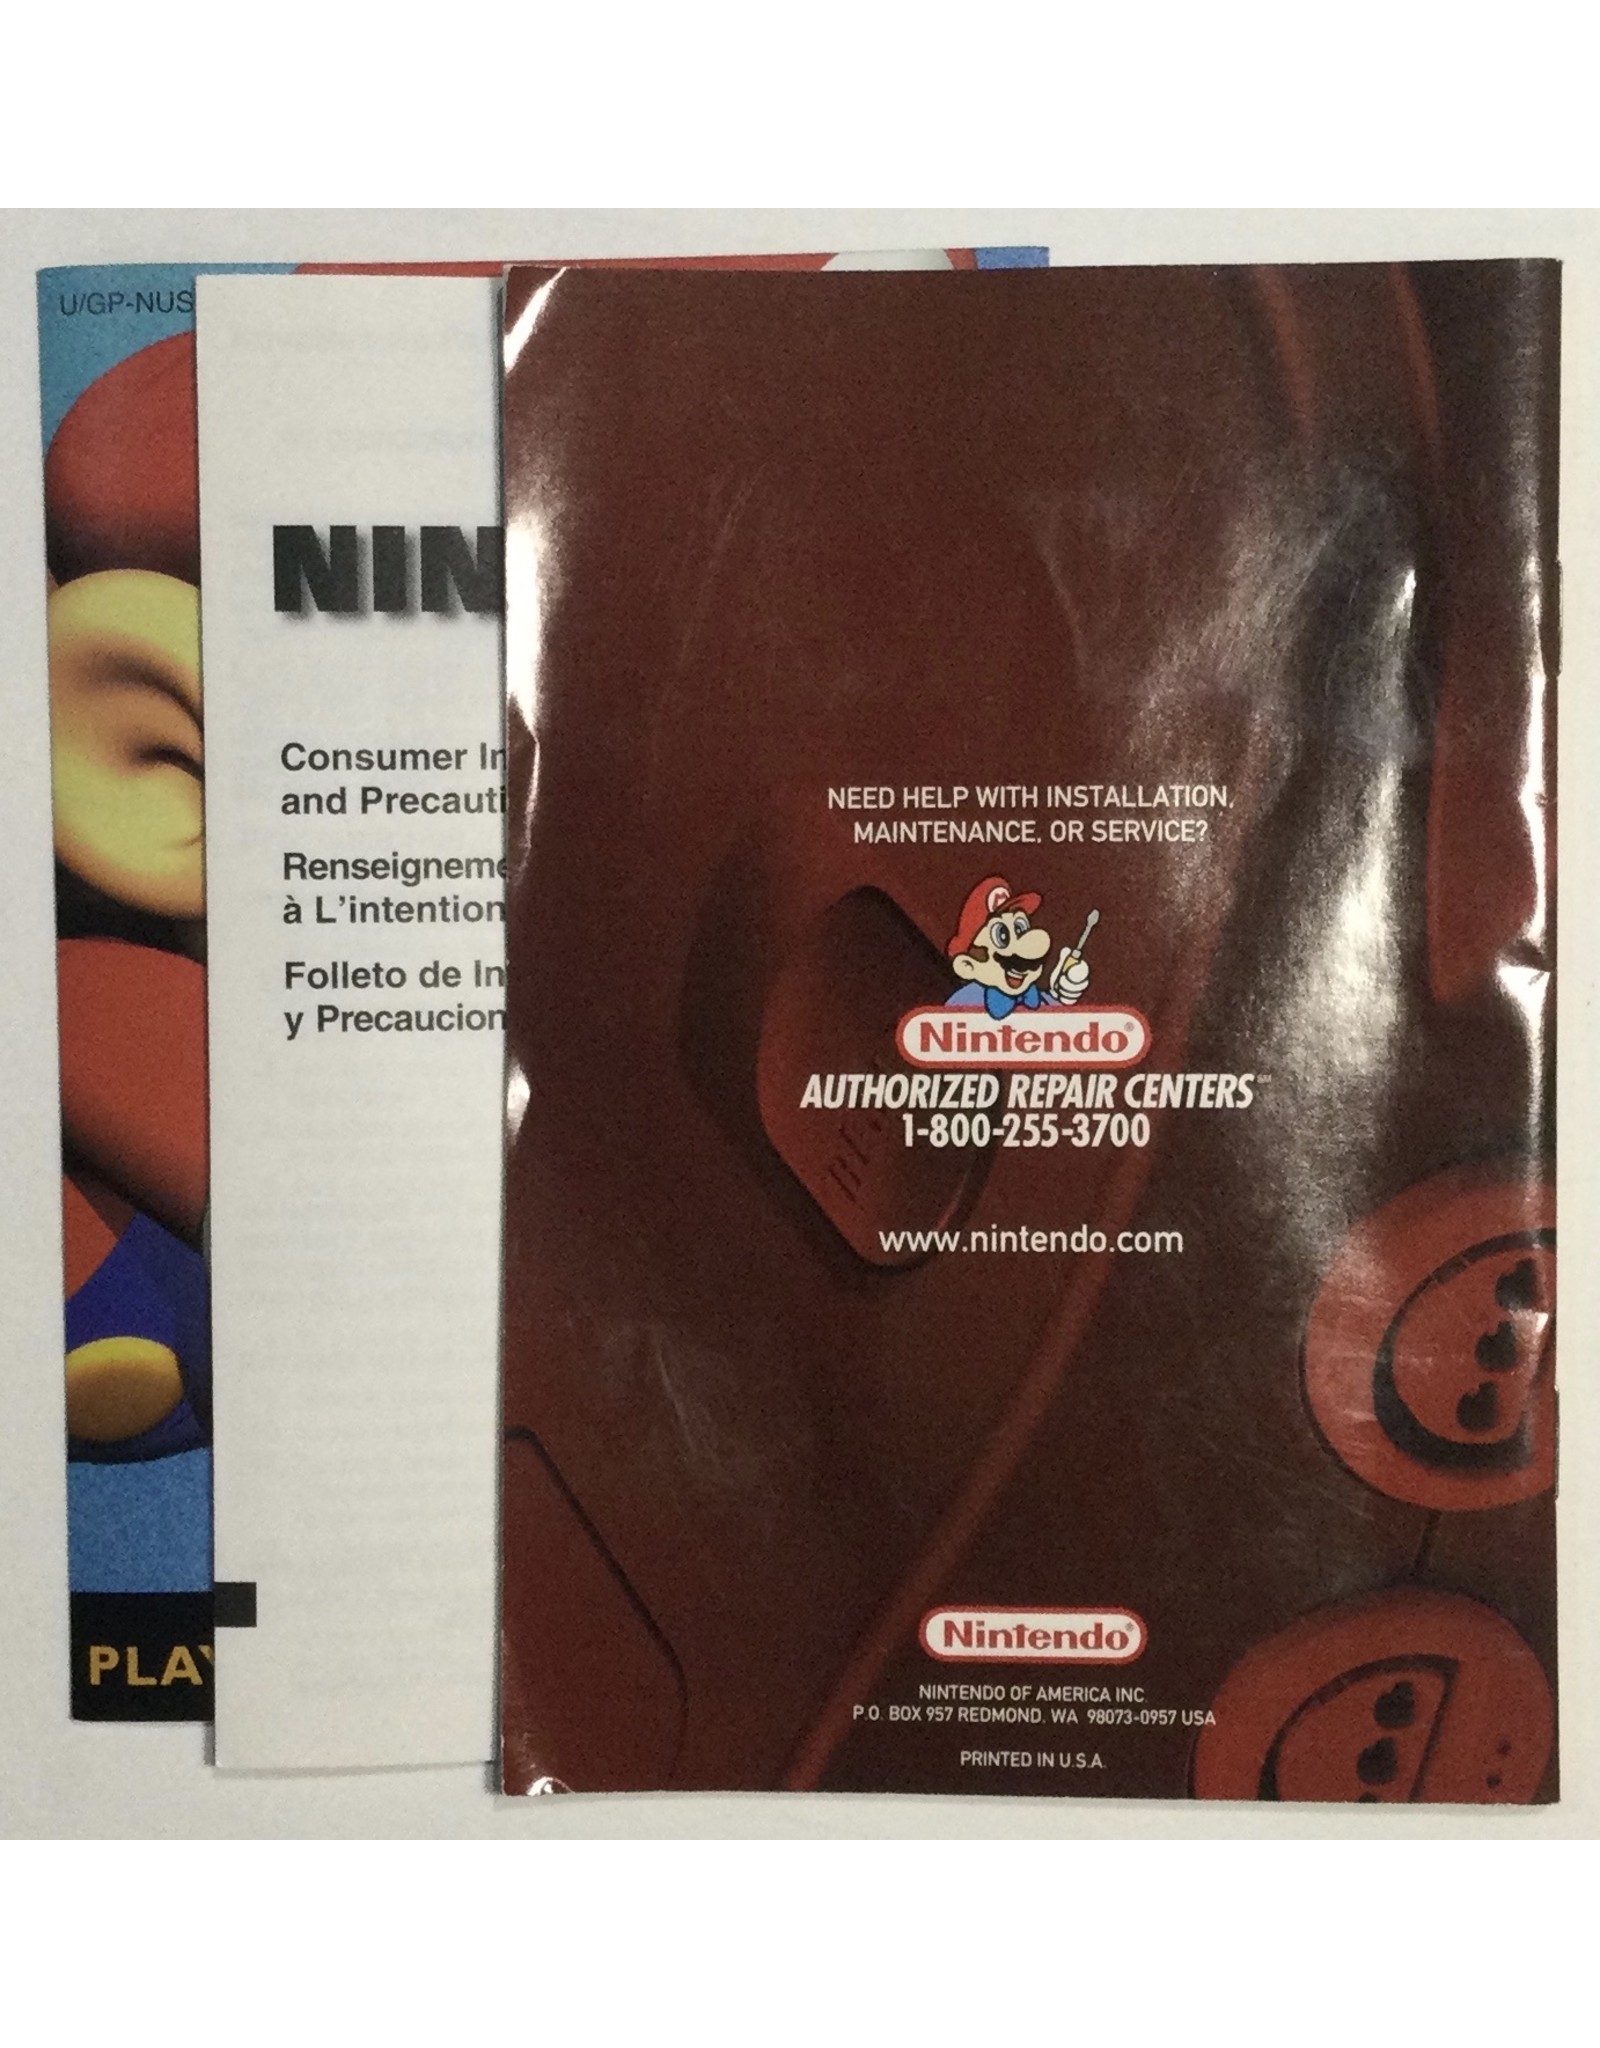 Nintendo Mario Tennis for Nintendo 64 (N64) - CIB